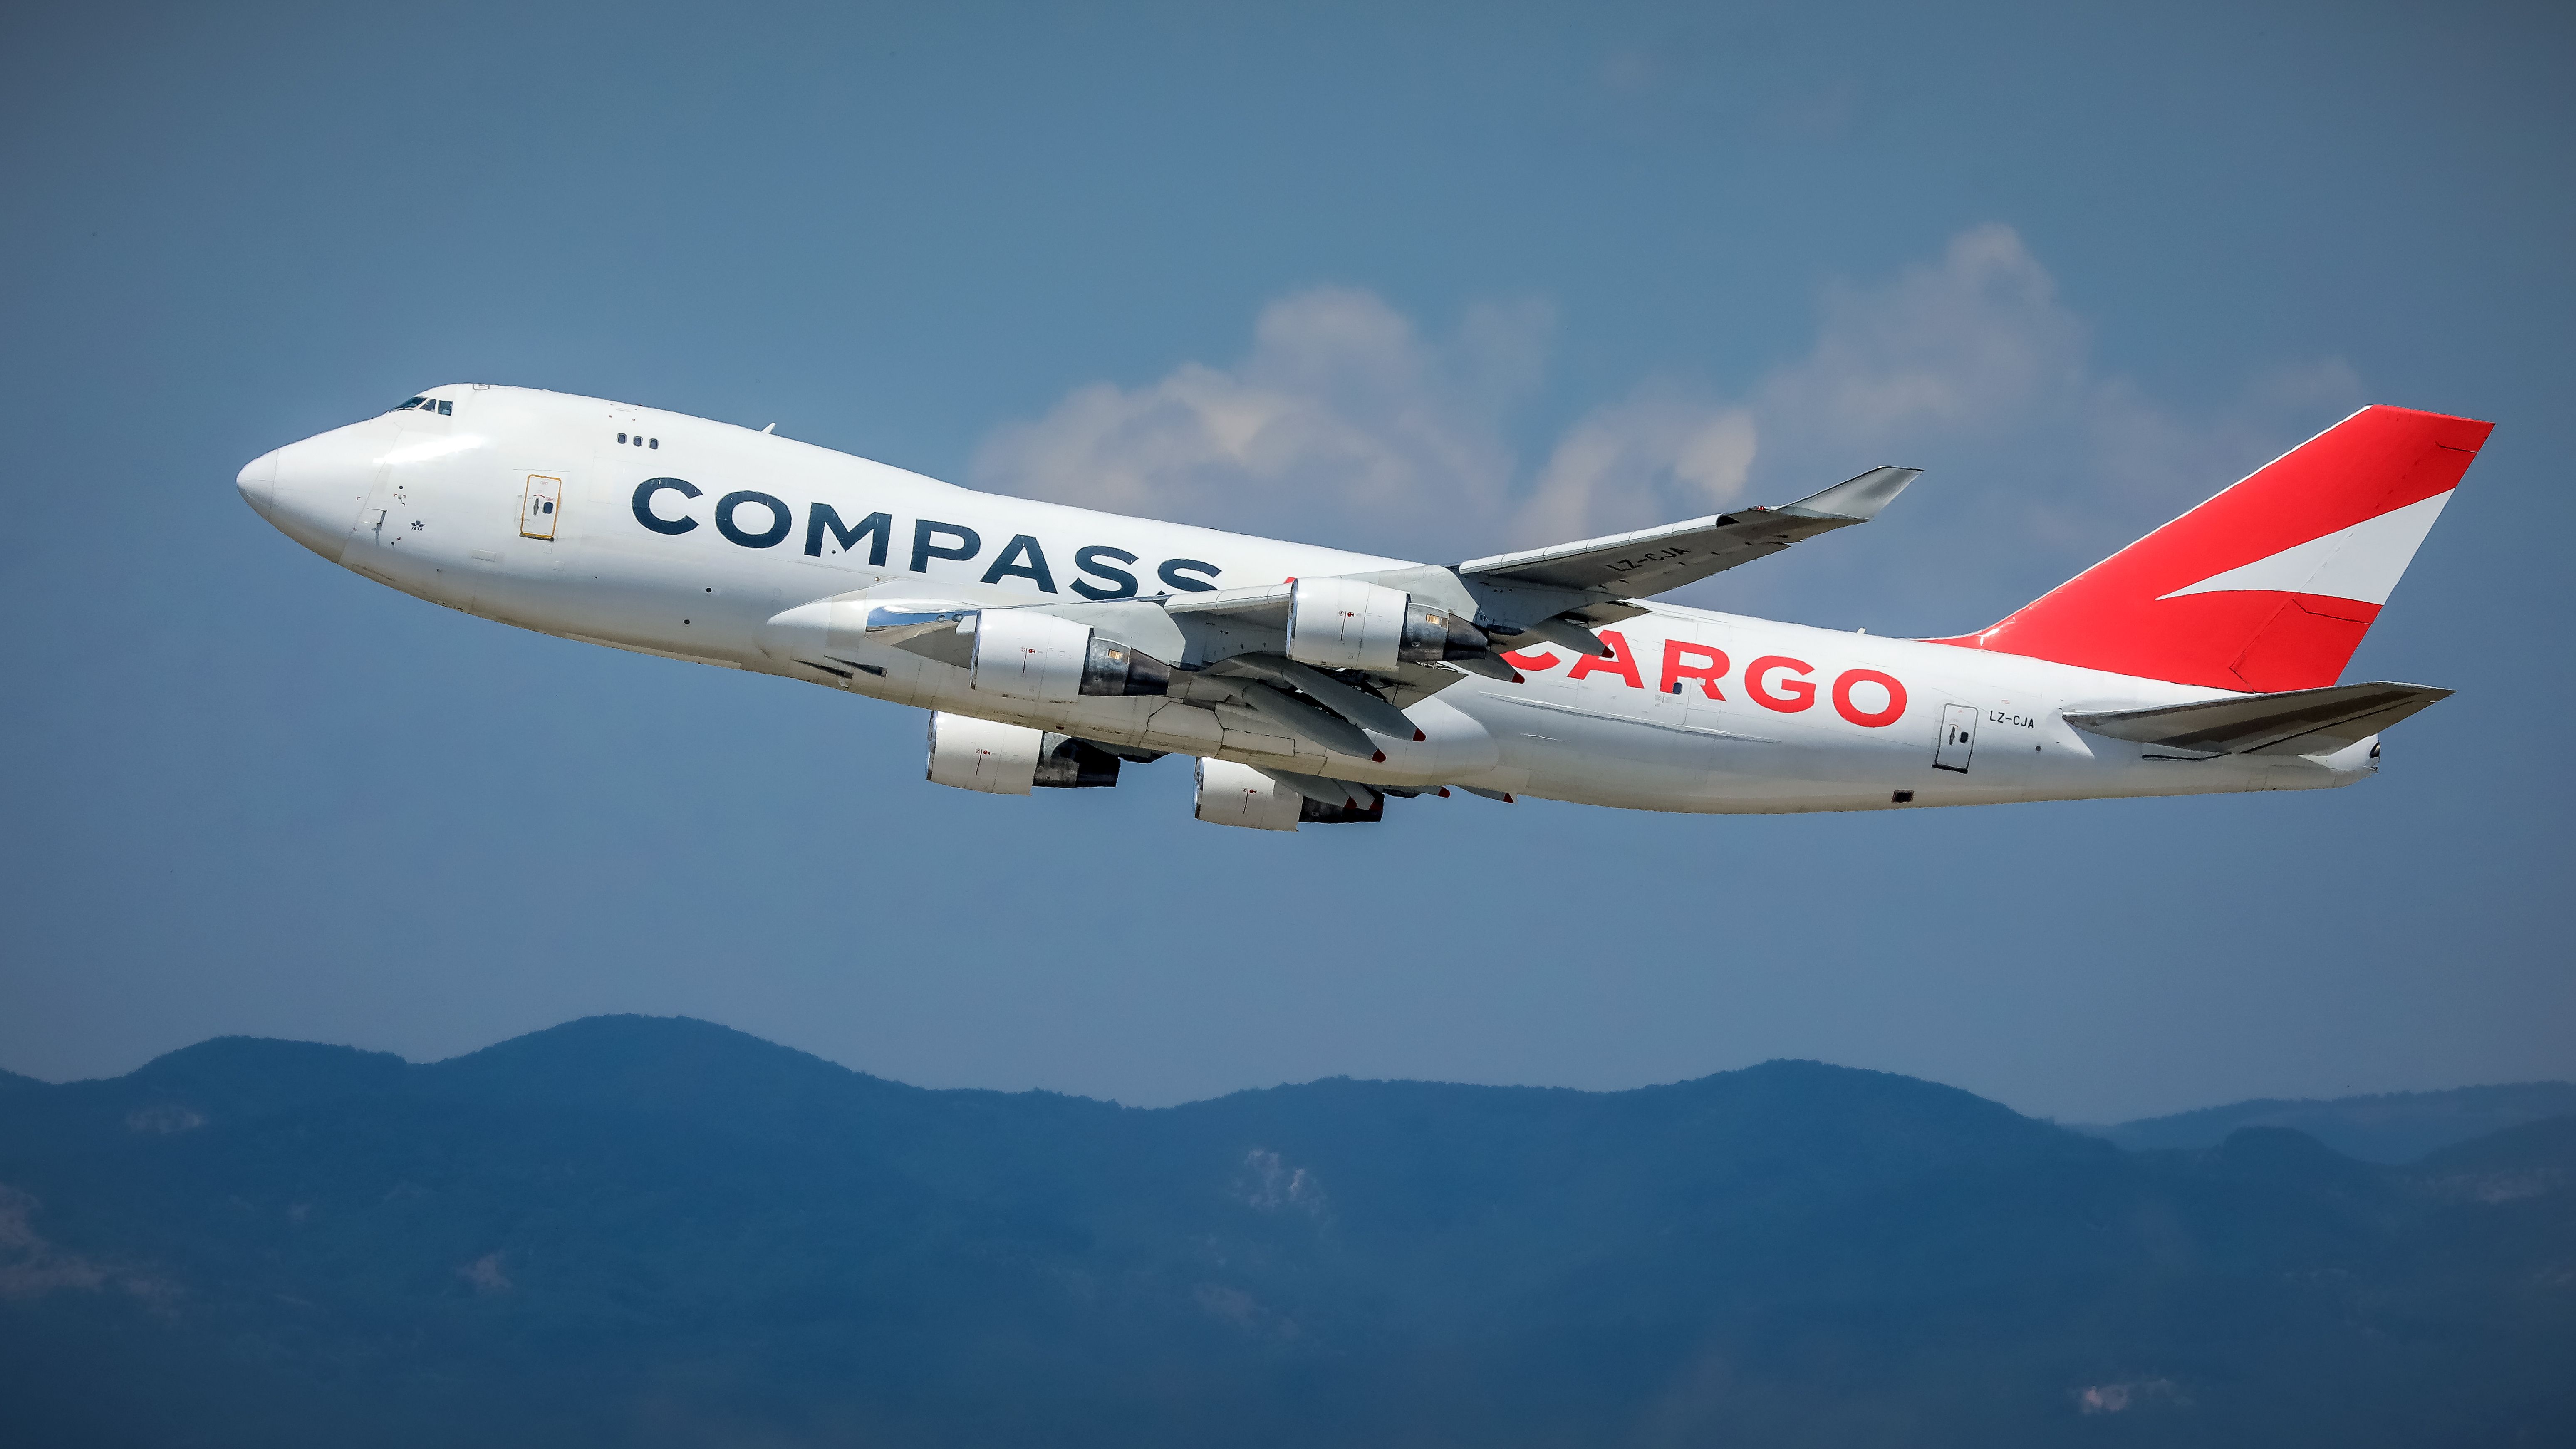 1-OOG_5333 - Compass Air Cargo Boeing 747-400F in flight